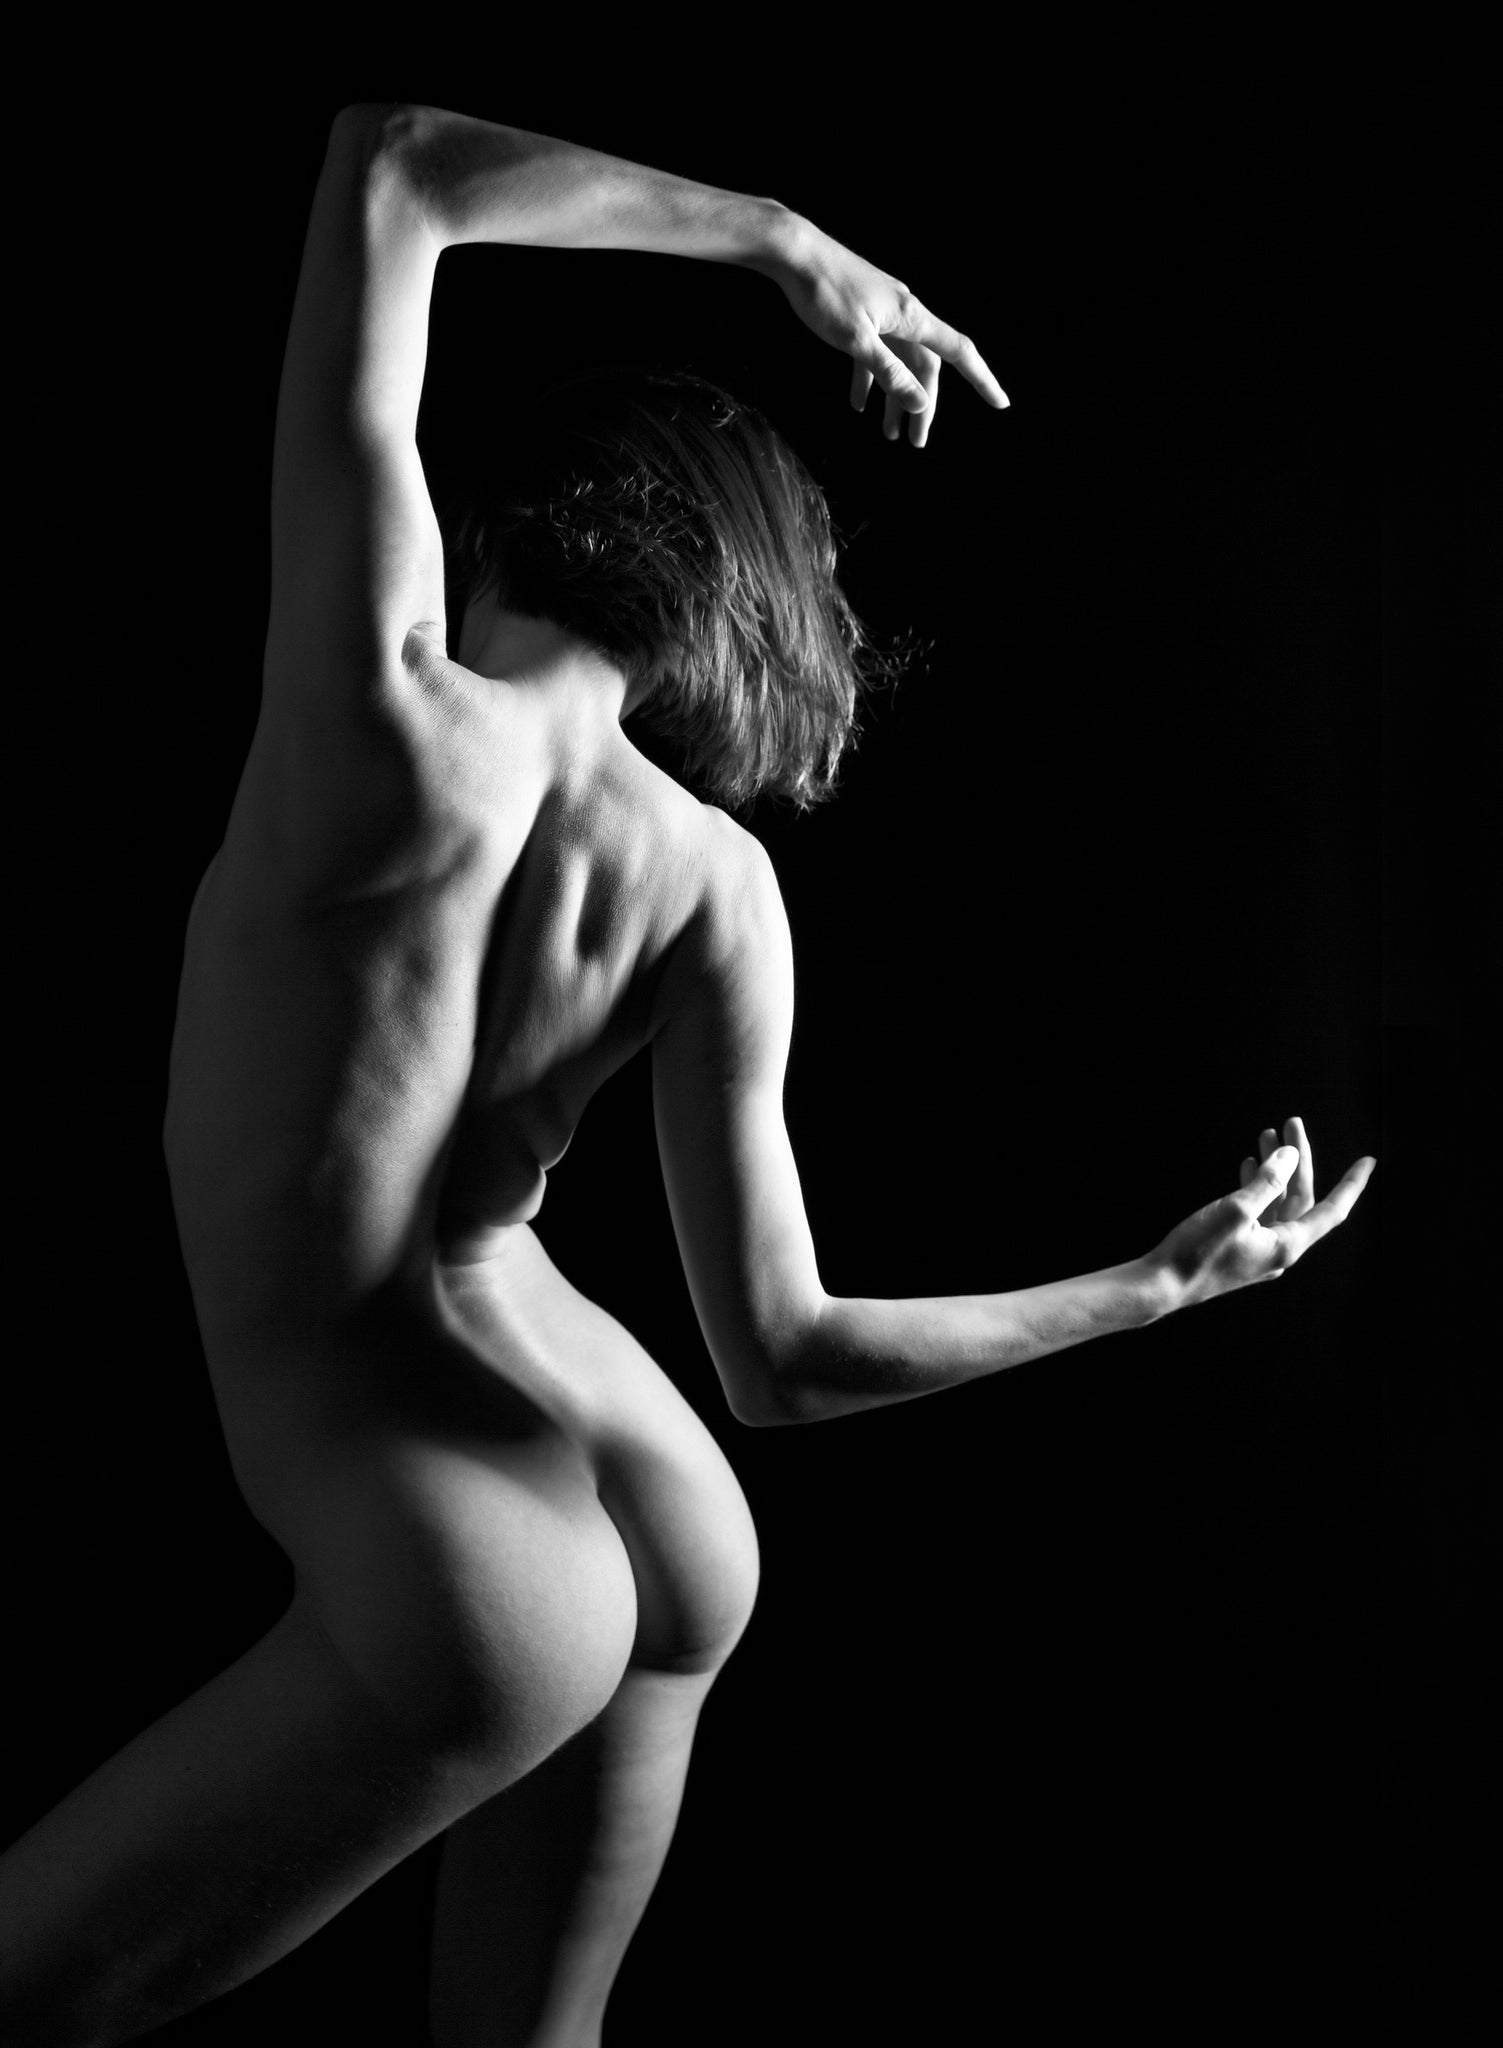 Artistic Porn - Artistic Nude/Black and Whiteâ€ Scott Weingarten, Digital Photography â€“  LagunaART.com gallery